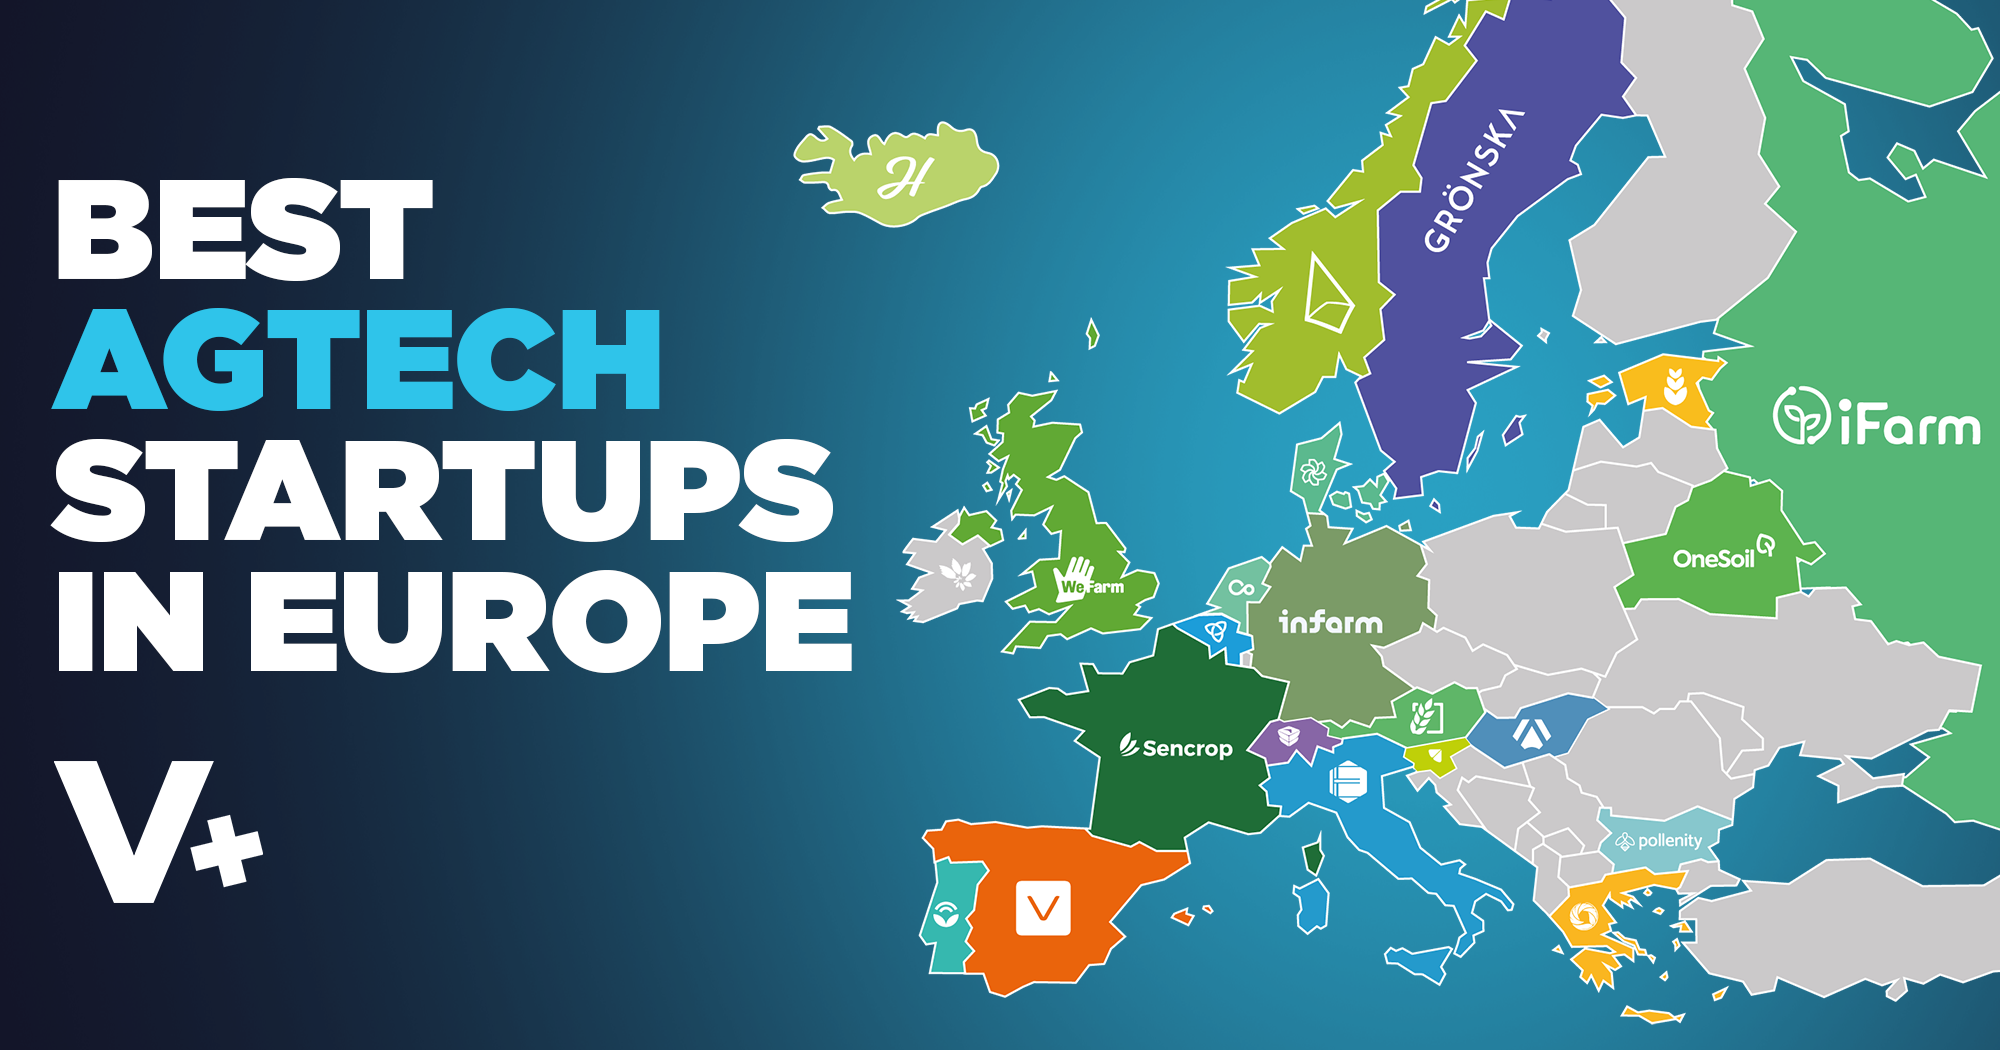 Best AgTech Startups in Europe